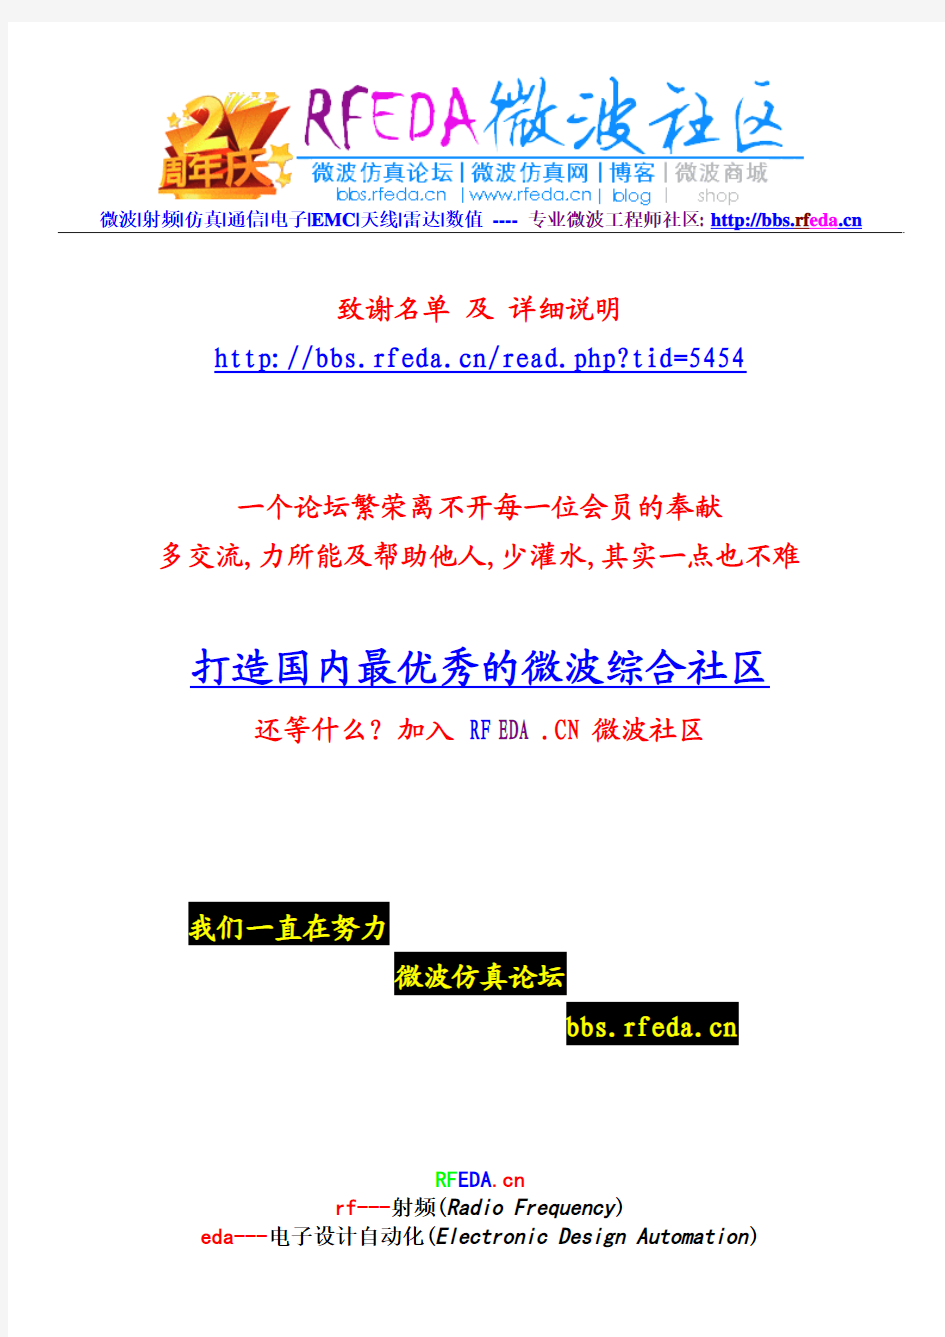 hfss中文教程 010-021 HFSS用户界面